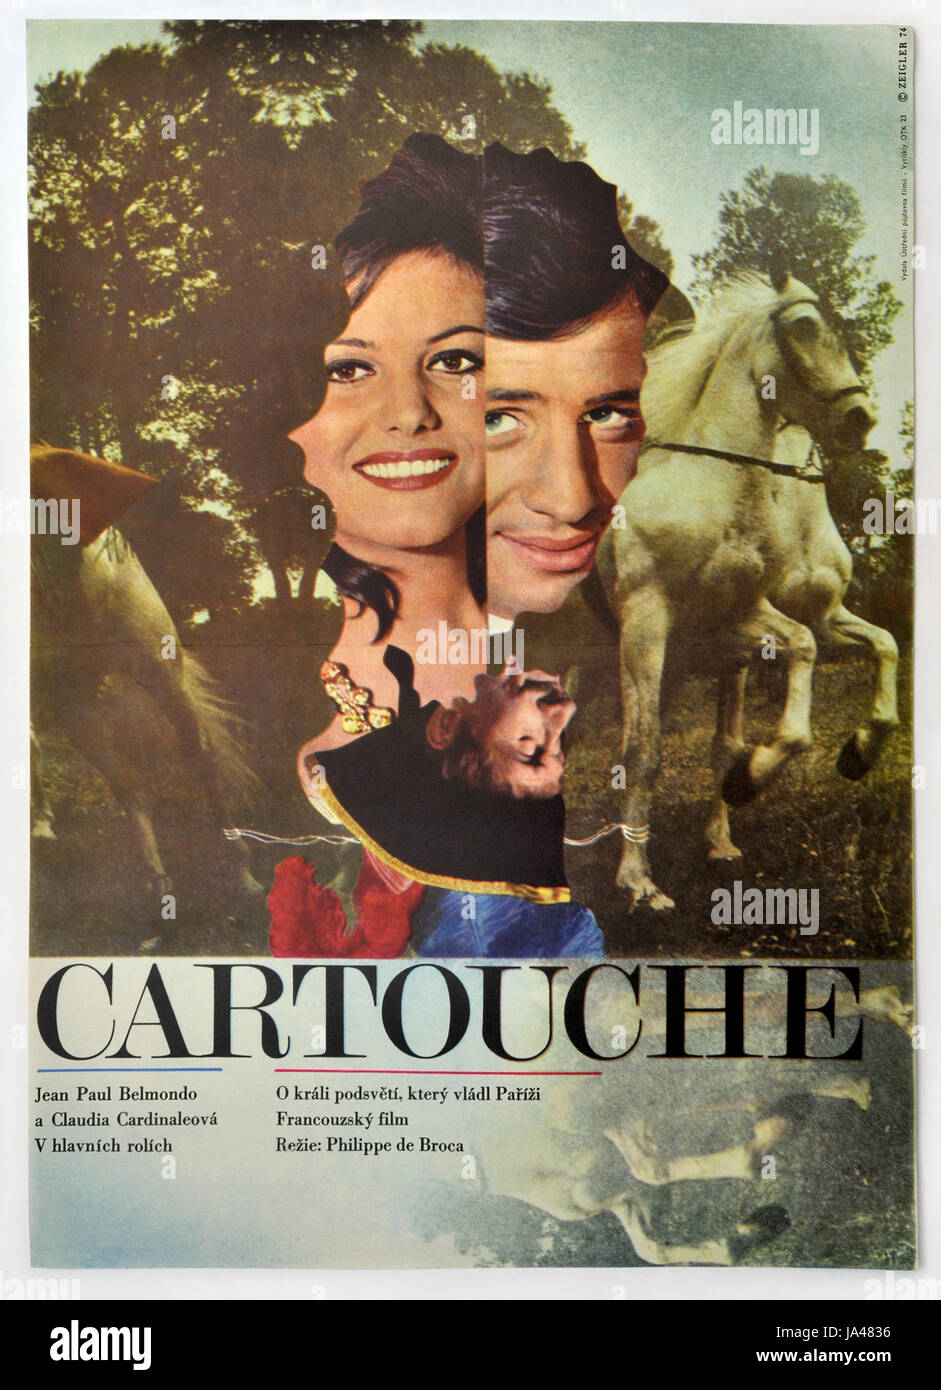 Cartouche. Original Czechoslovak movie poster for French historic comedy with Claudia Cardinale and Jean-Paul Belmondo. Design: Zdenek Ziegler Stock Photo